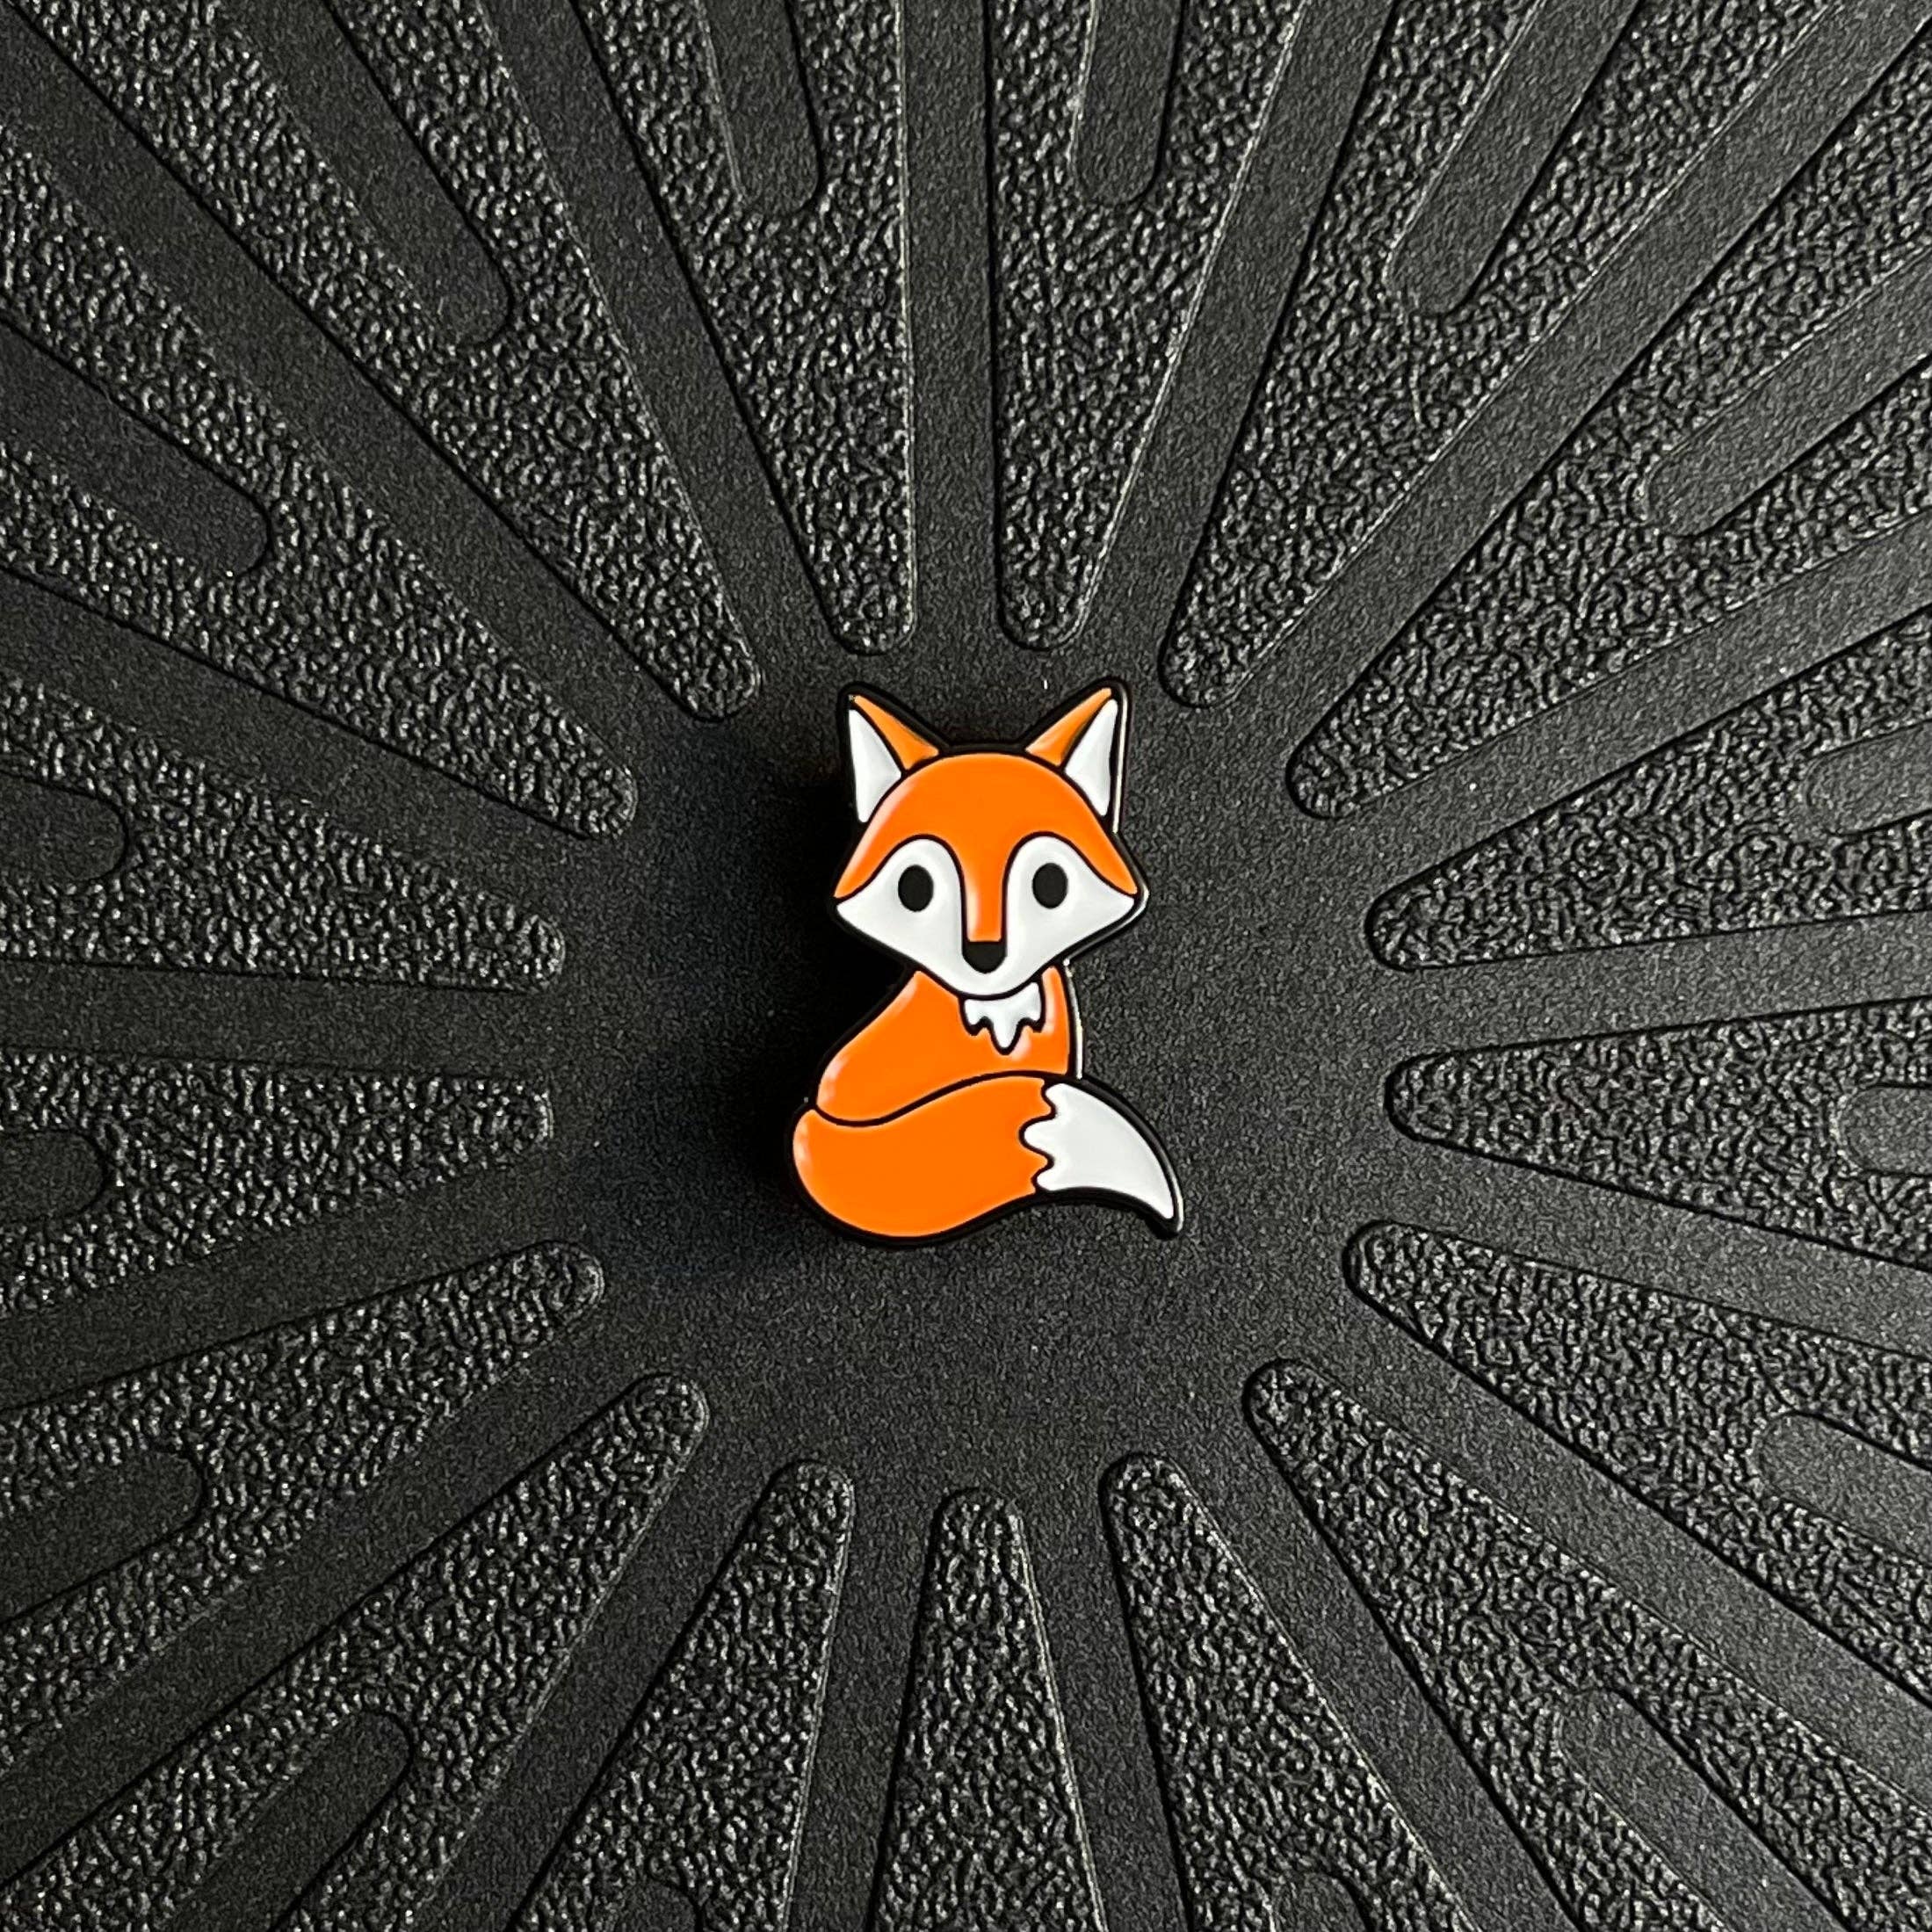 Pinsnickety - Fox Pins